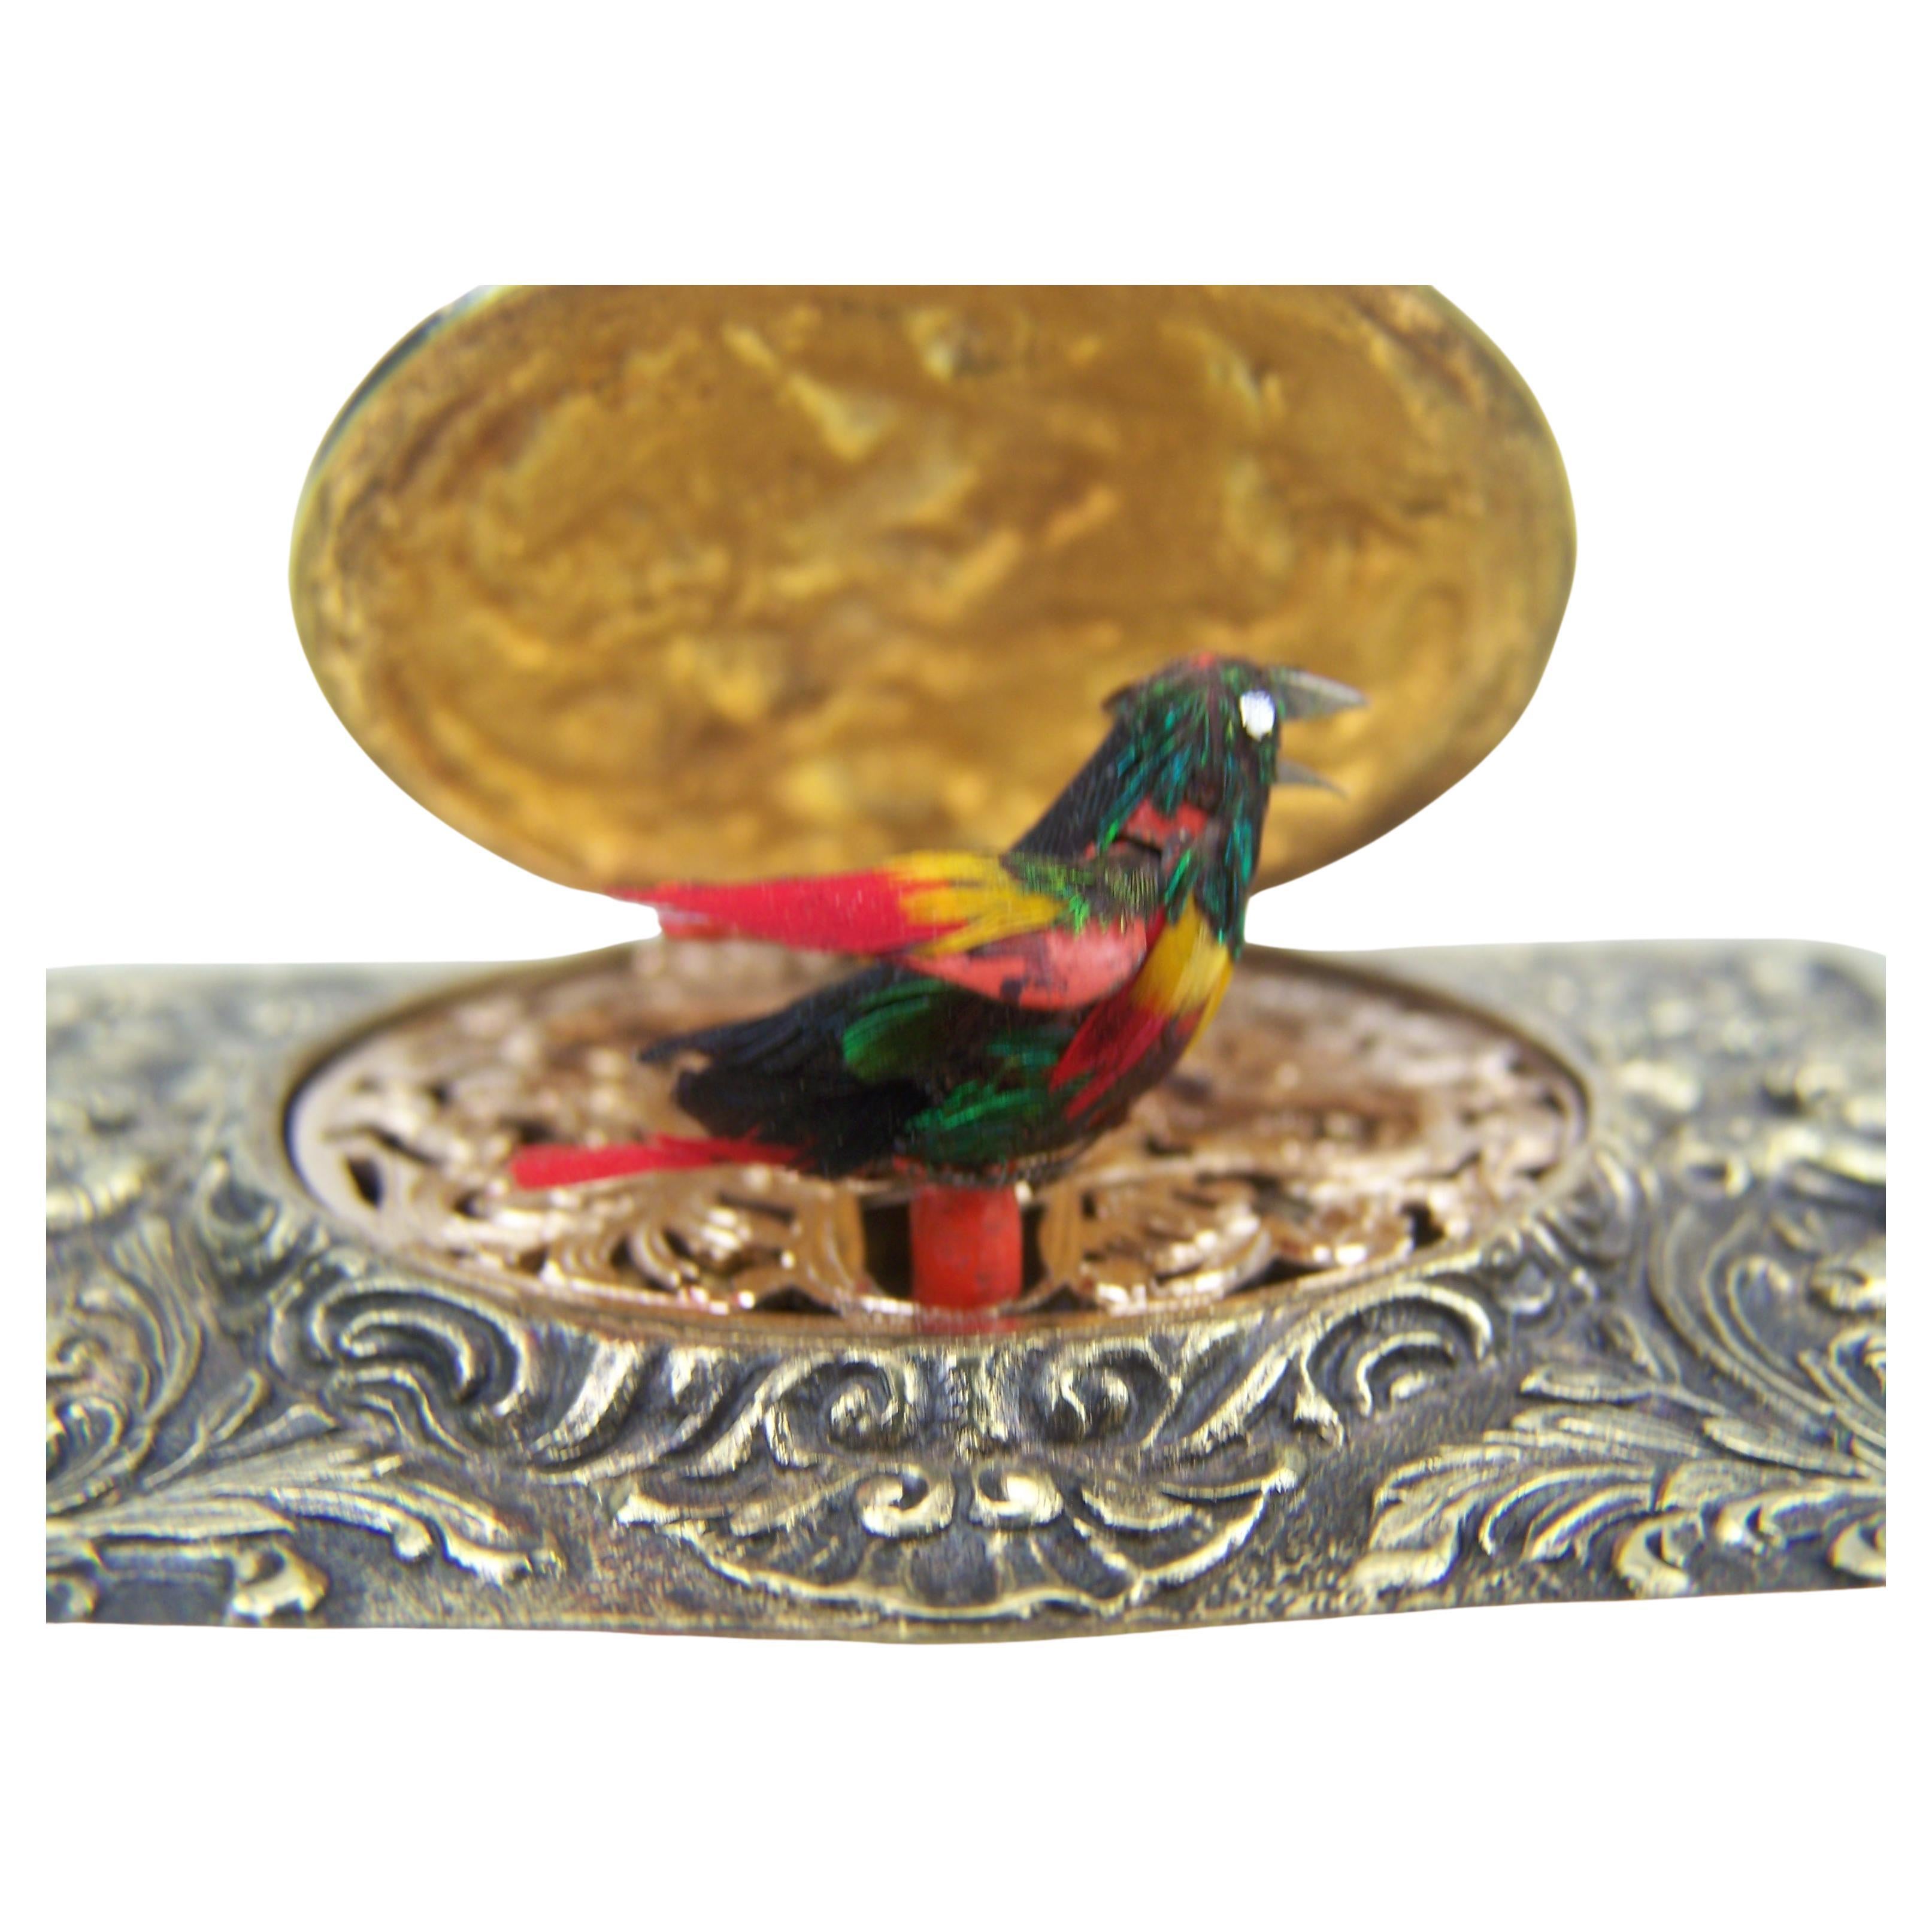 Singing bird box by K Griesbaum in guilded case